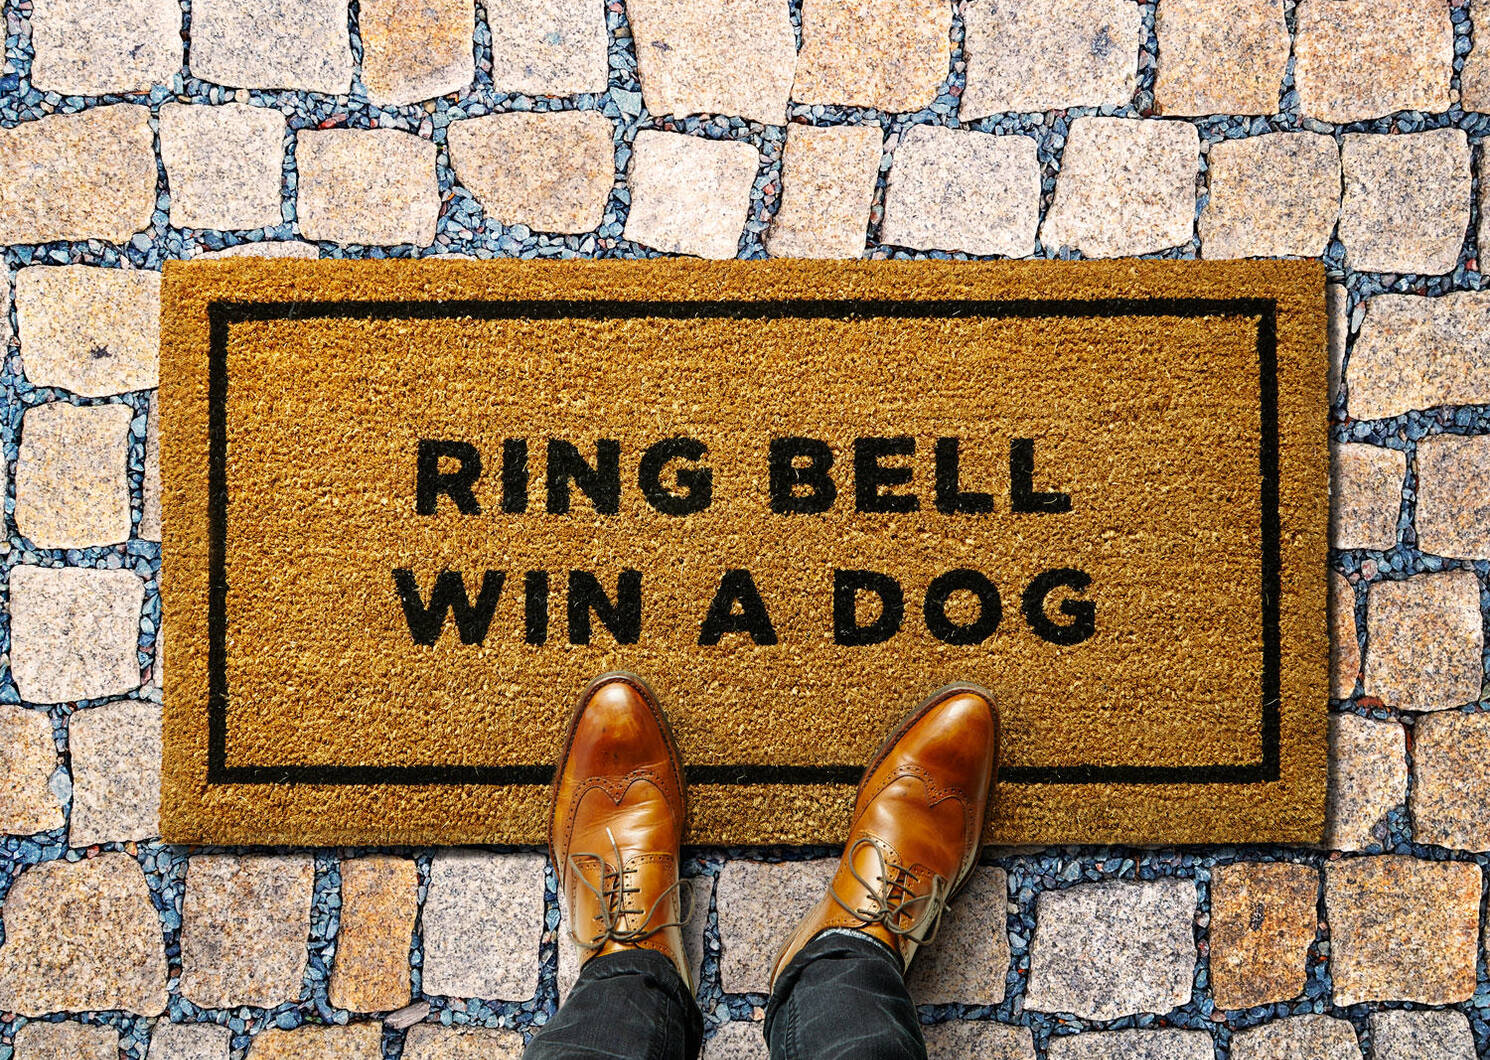 Ring Bell Win a Dog Doormat